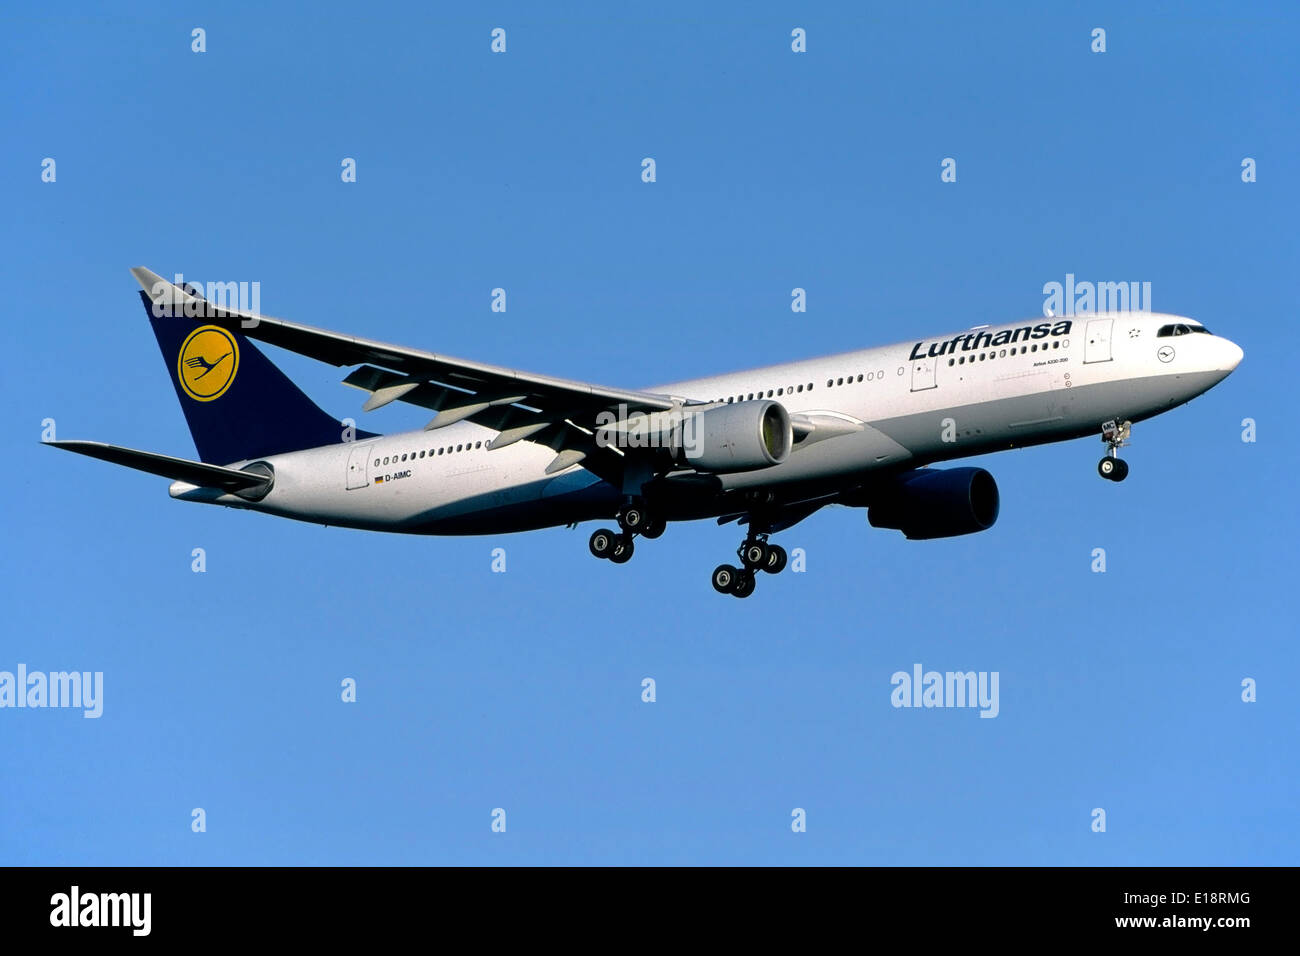 An Airbus A330-200 passenger aircraft ofgerman airline Lufthansa is landing at Frankfurt-Main airport. Stock Photo